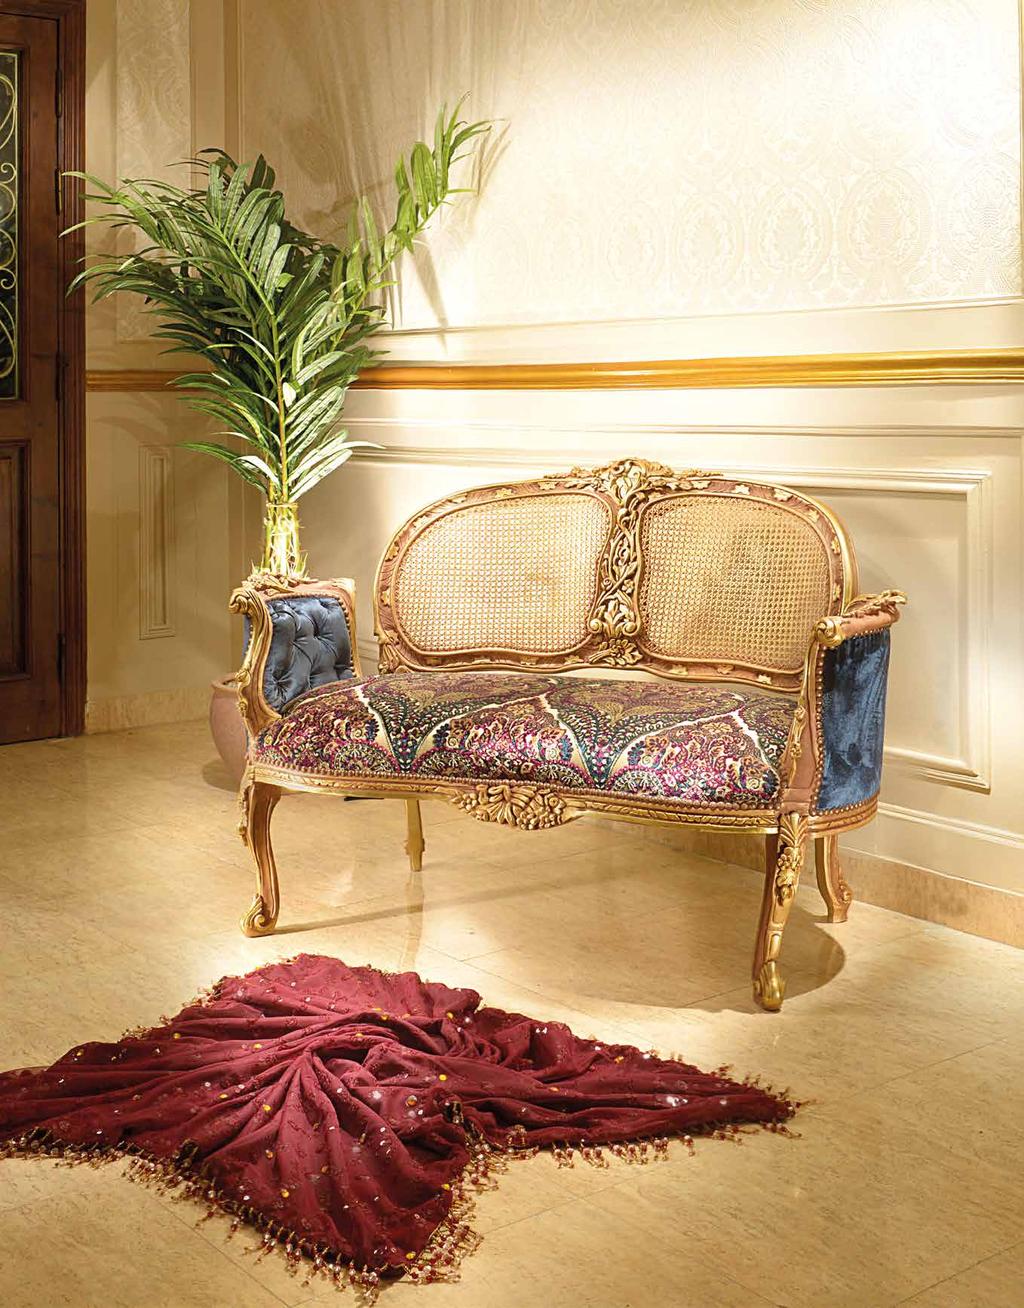 Elegant sofa with a classic